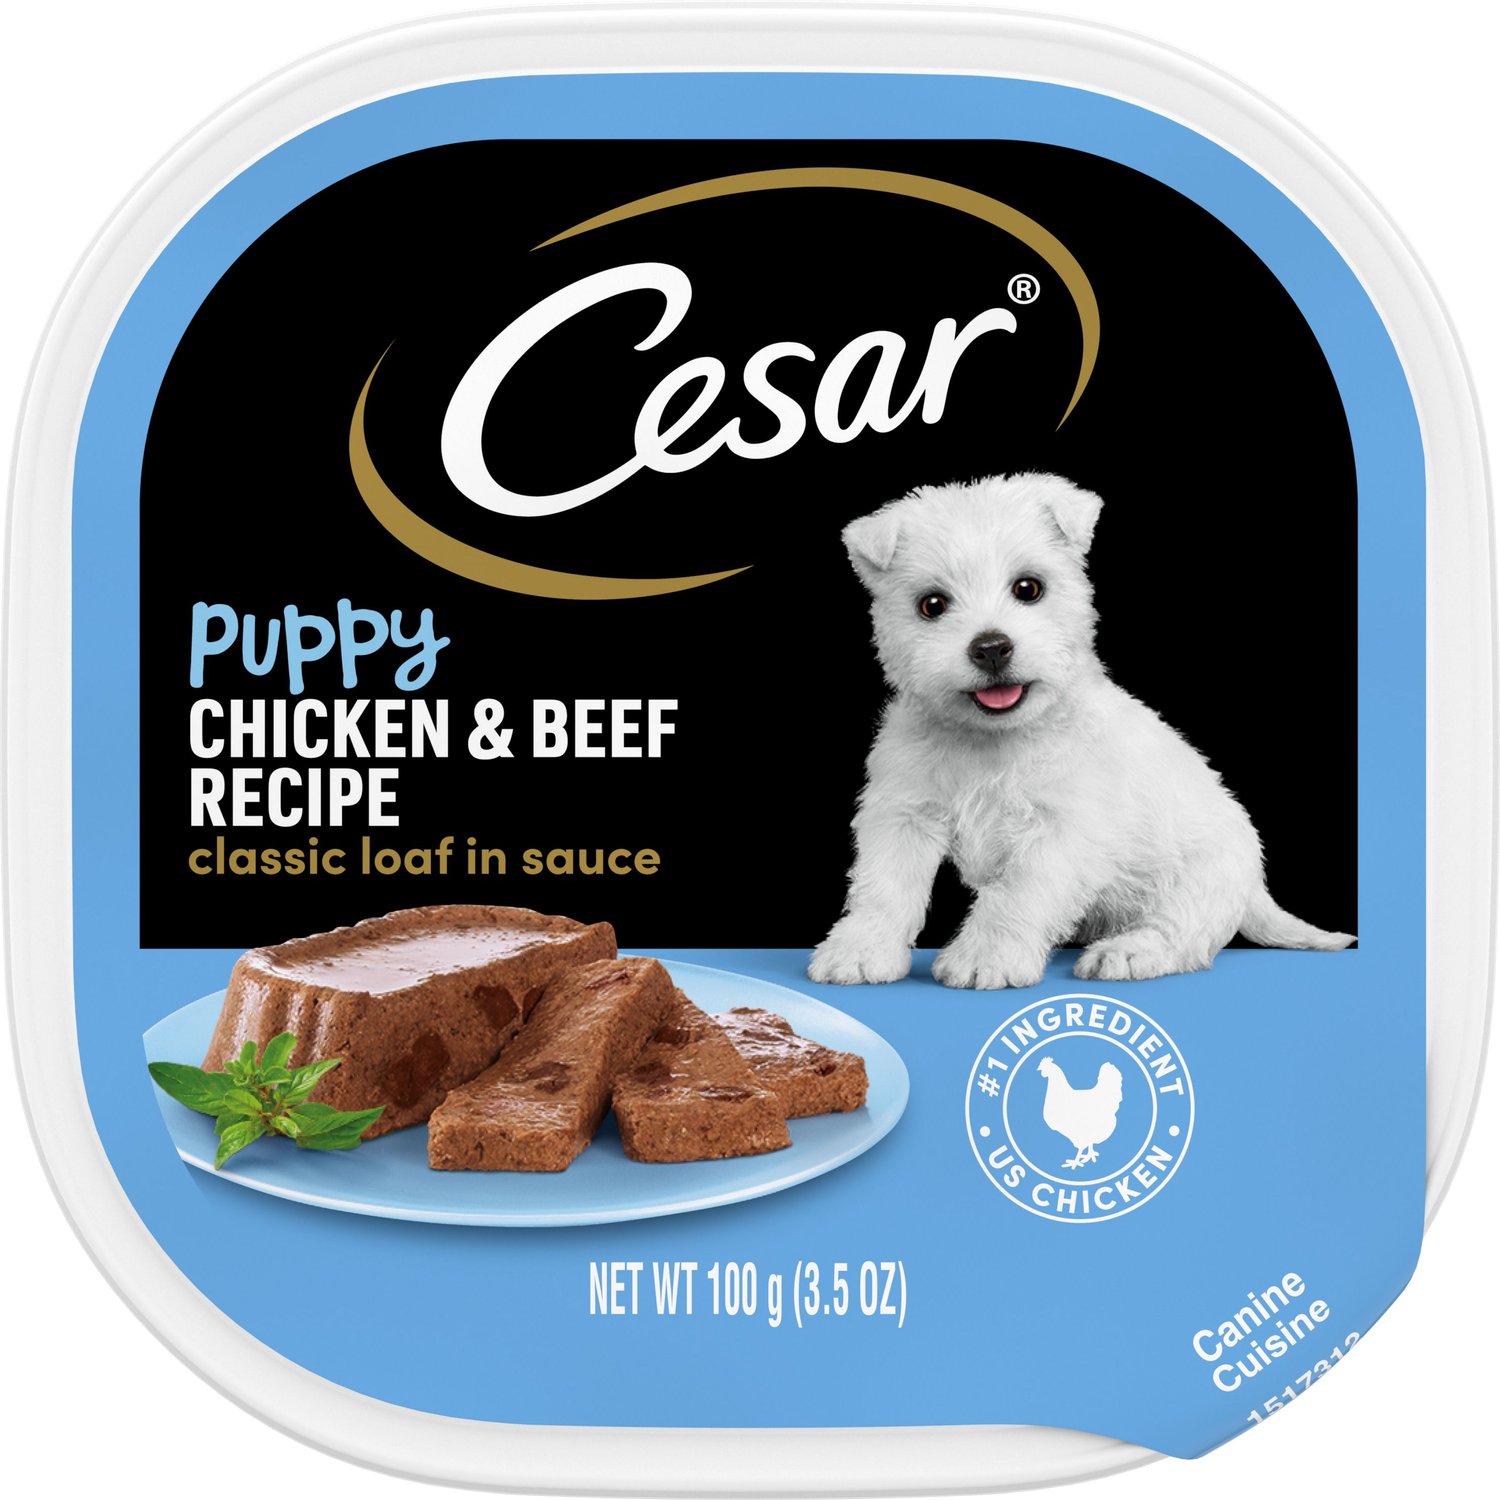 Cesar Dog Food Feeding Chart